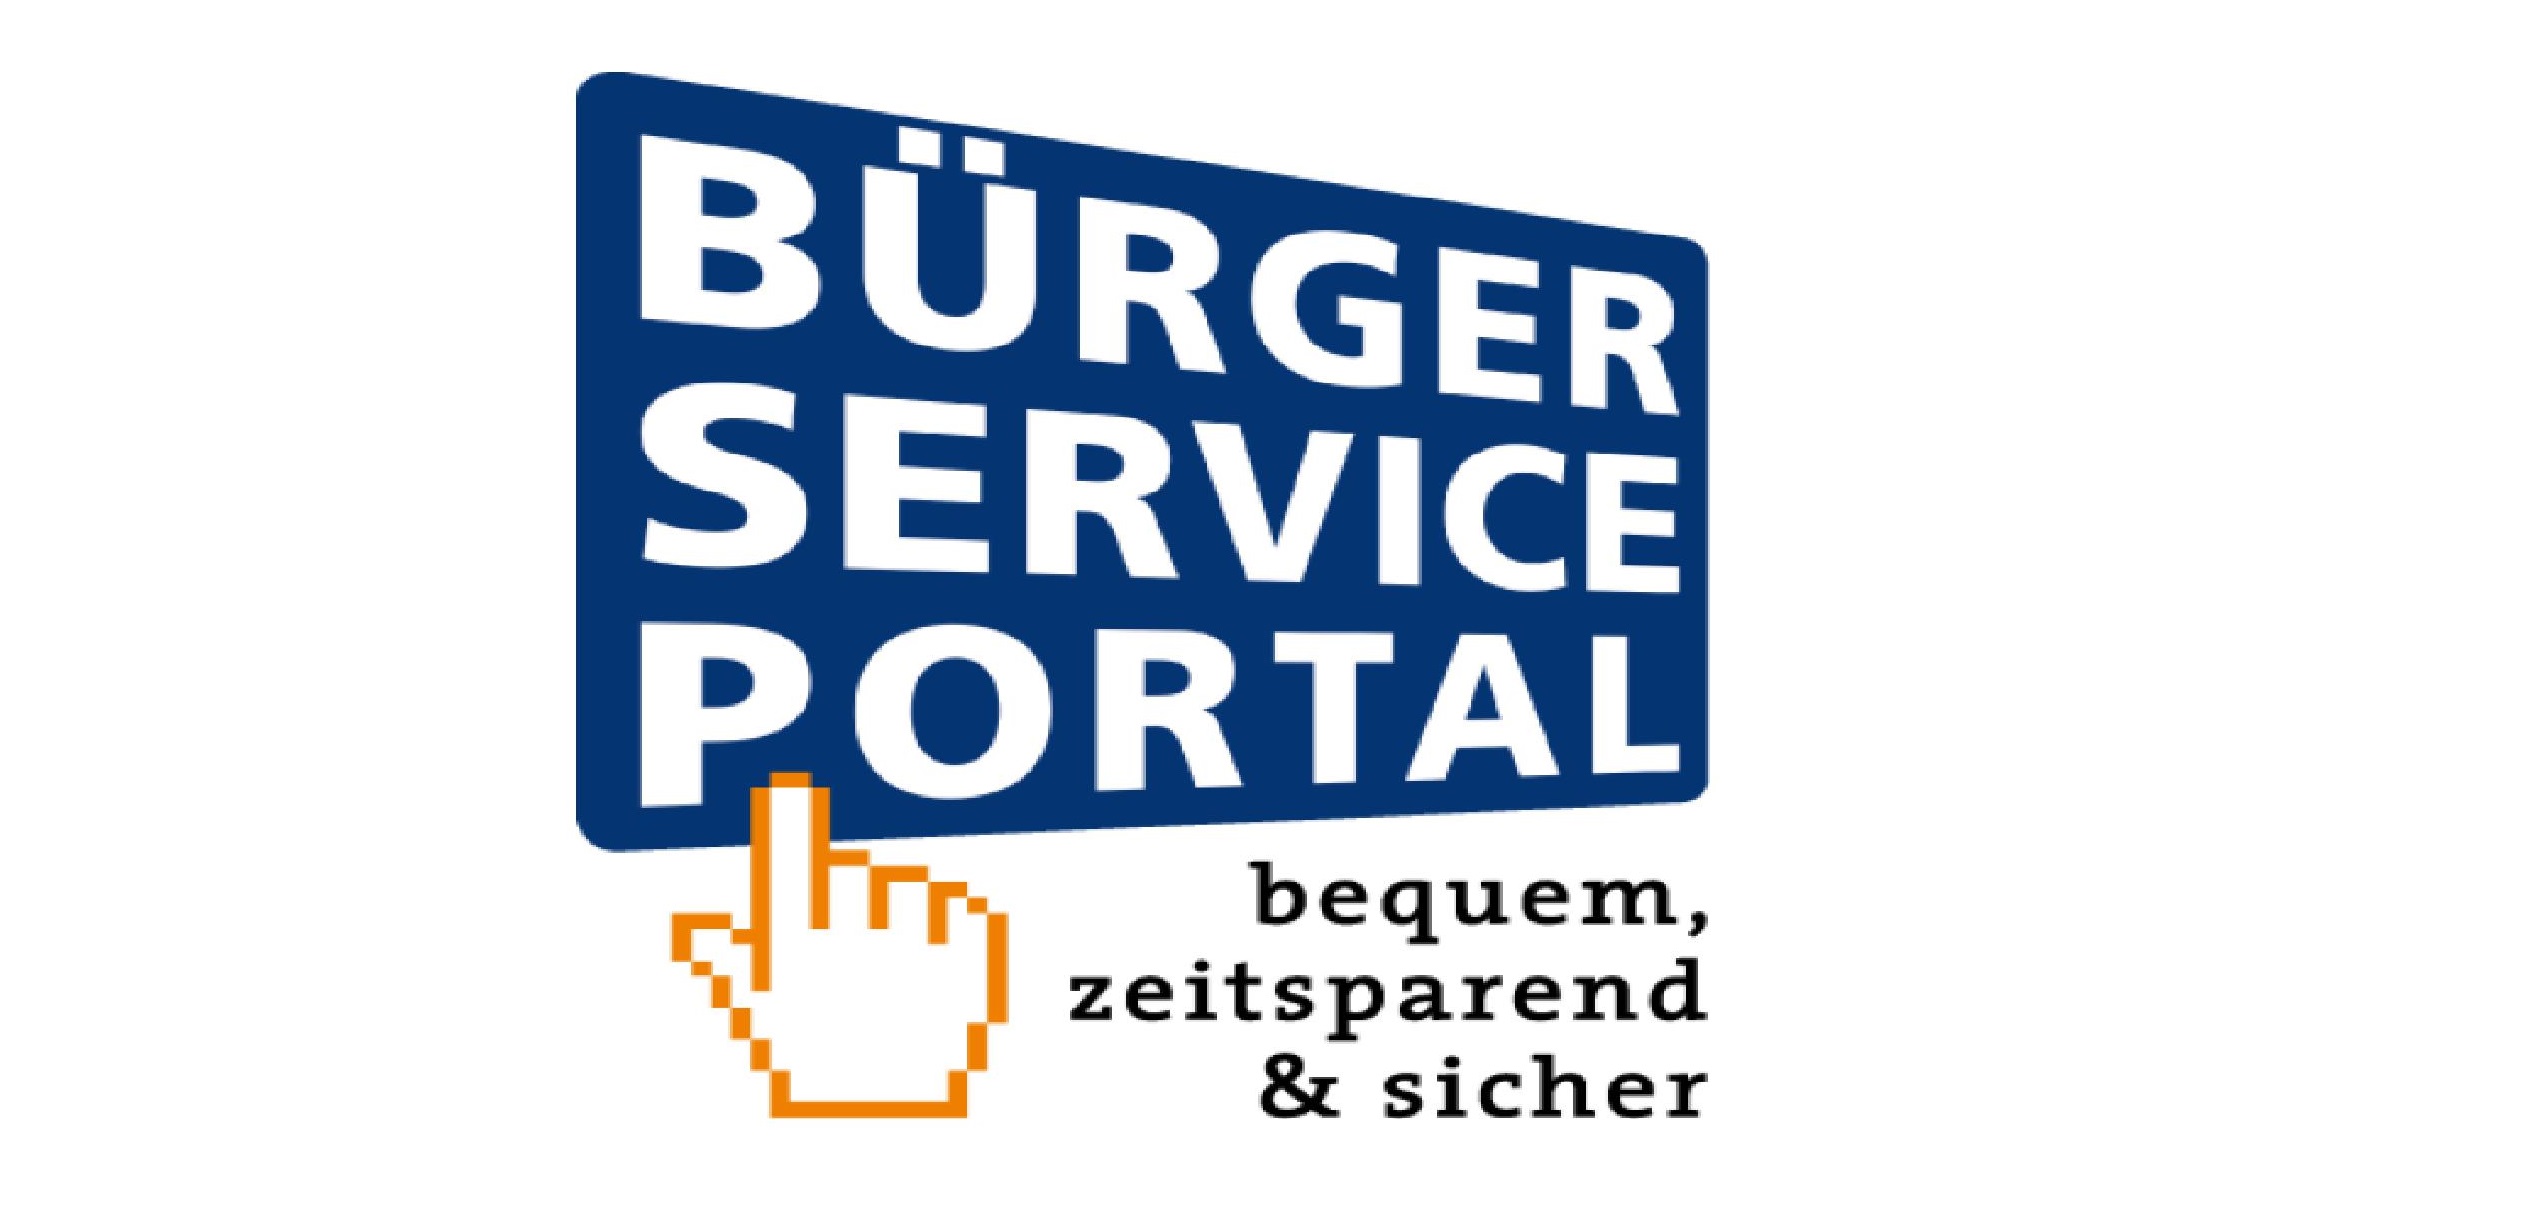 Bürgerserviceportal Logo.jpg